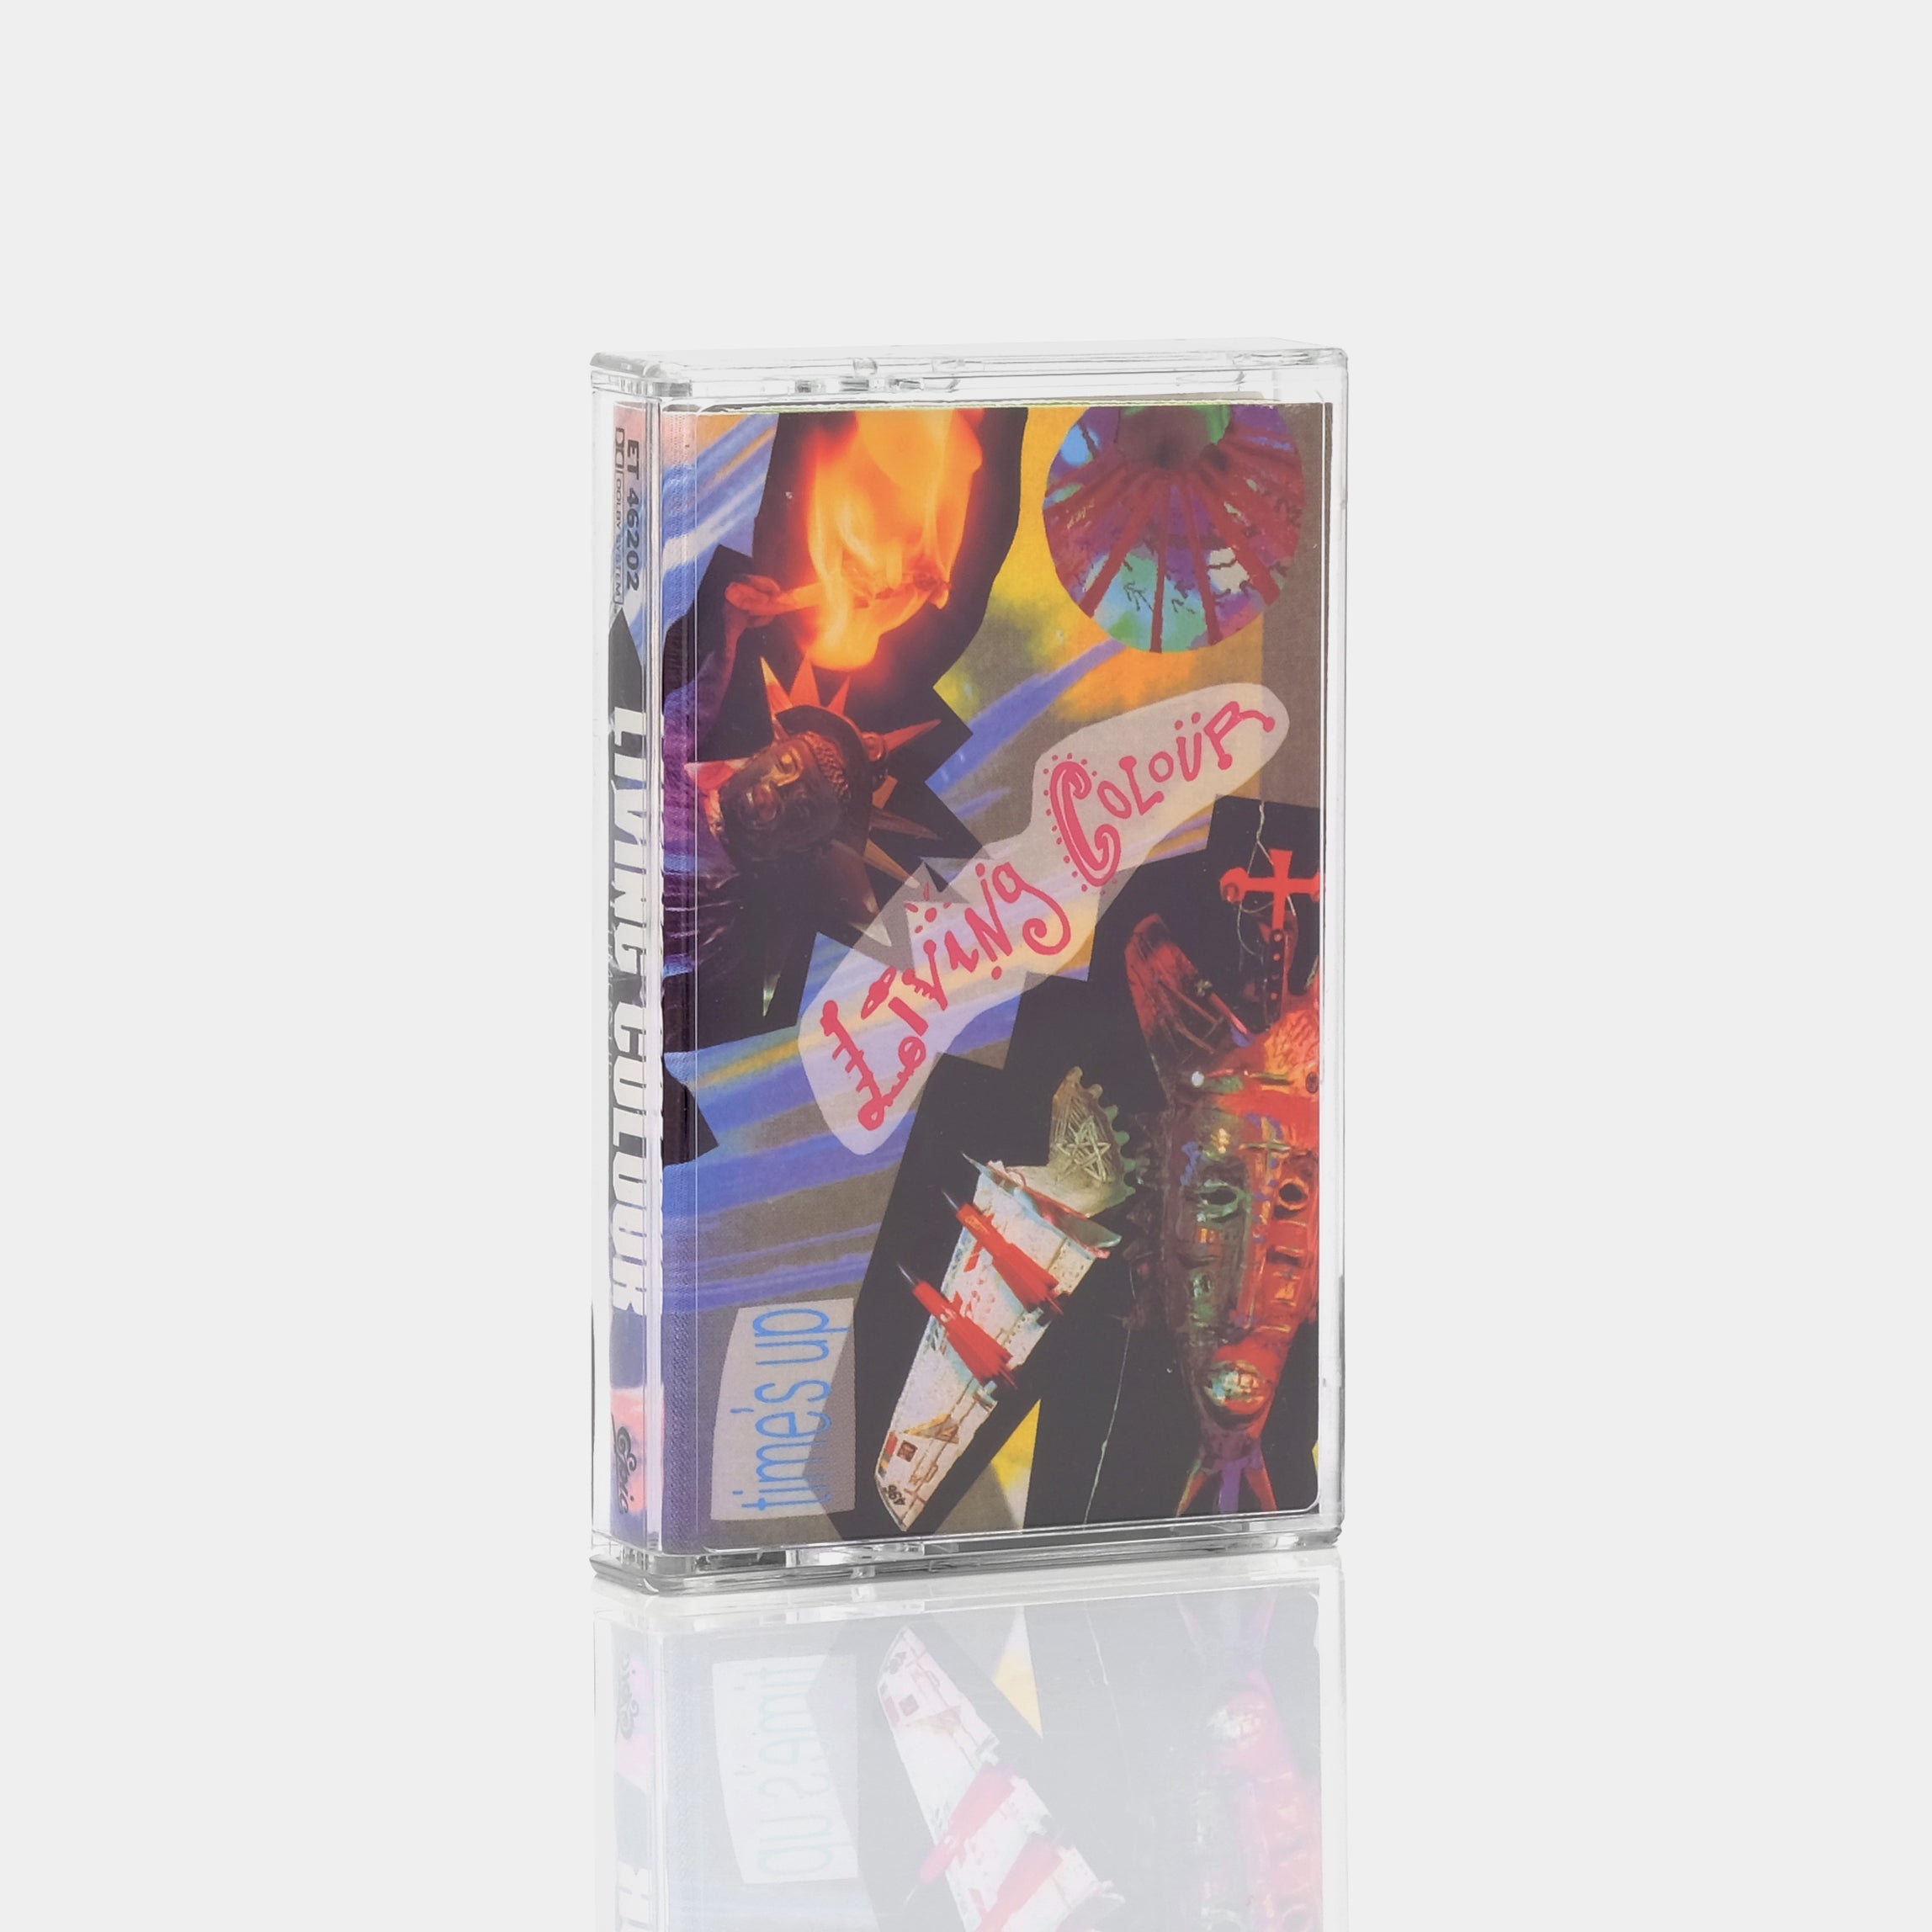 Living Colour - Time's Up Cassette Tape